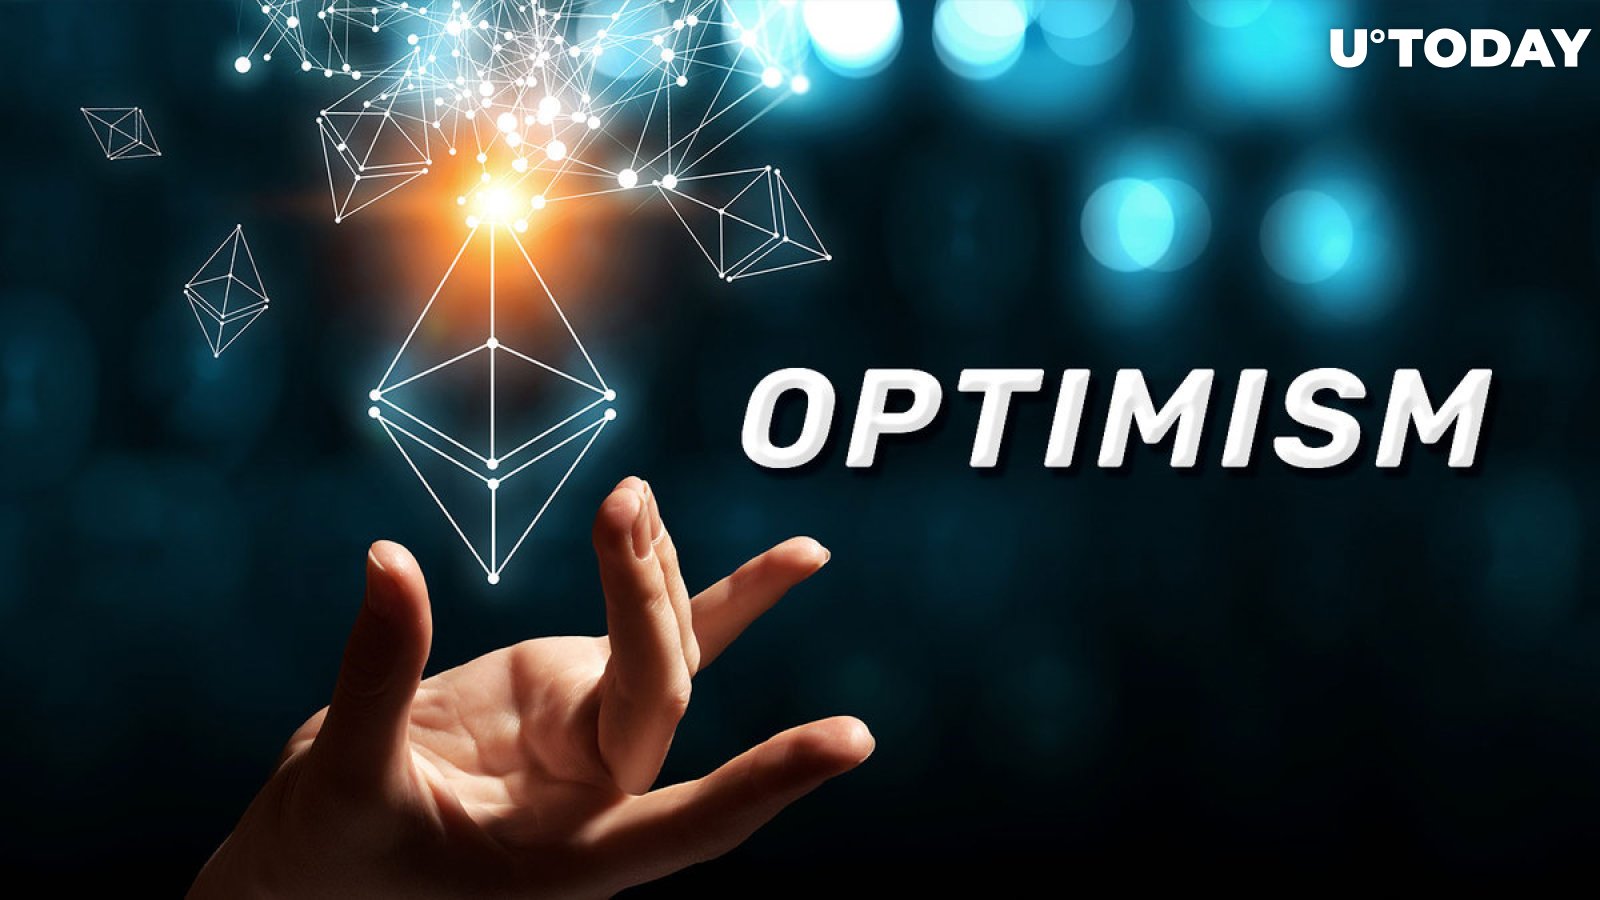 Optimism Ethereum Deposits Are Skyrocketing, Showing 800% Growth